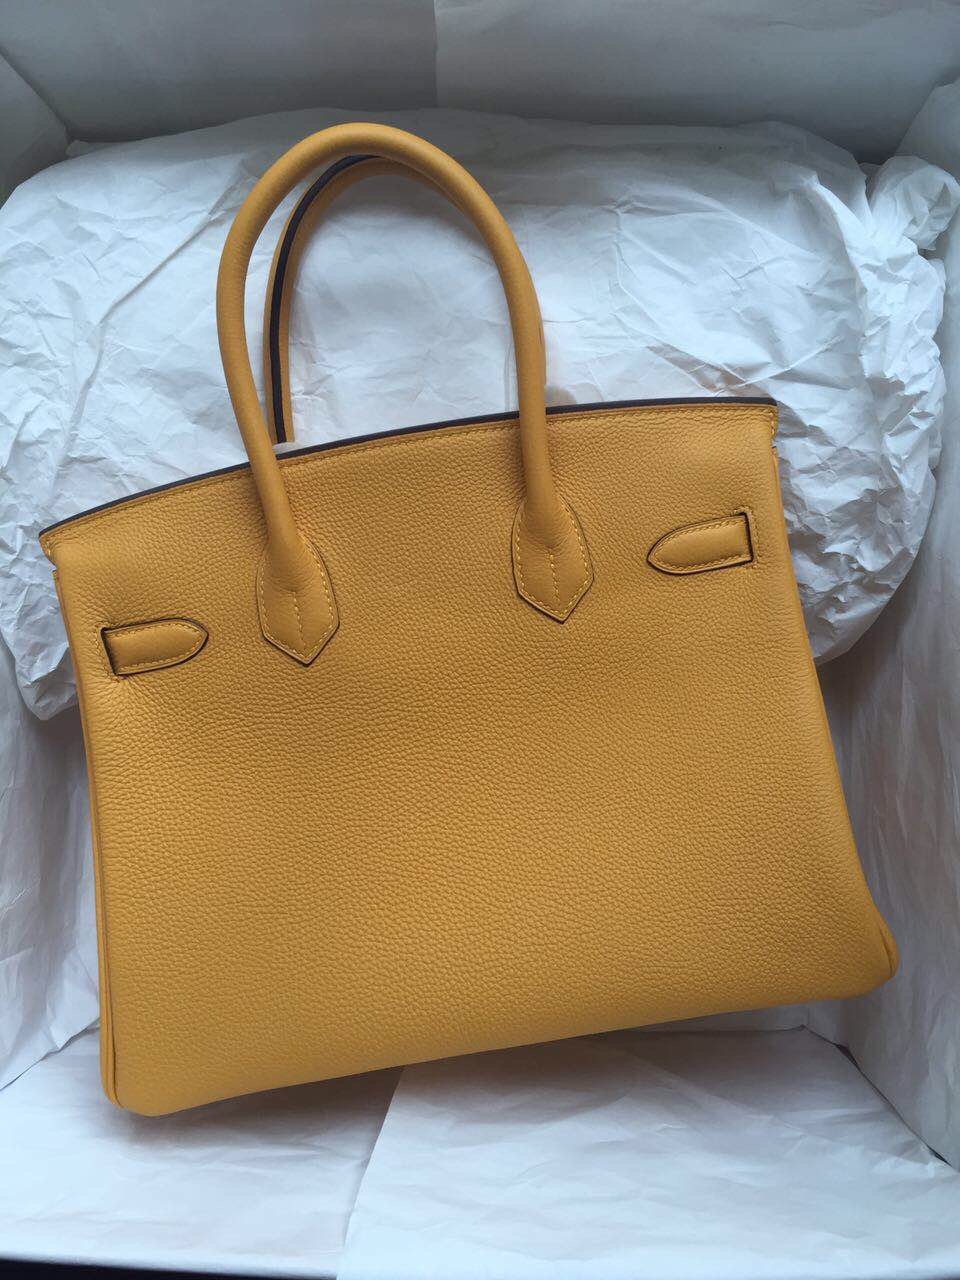 Discount Hermes Birkin Bag Mustard Yellow Togo Leather Tote Handbag 30cm